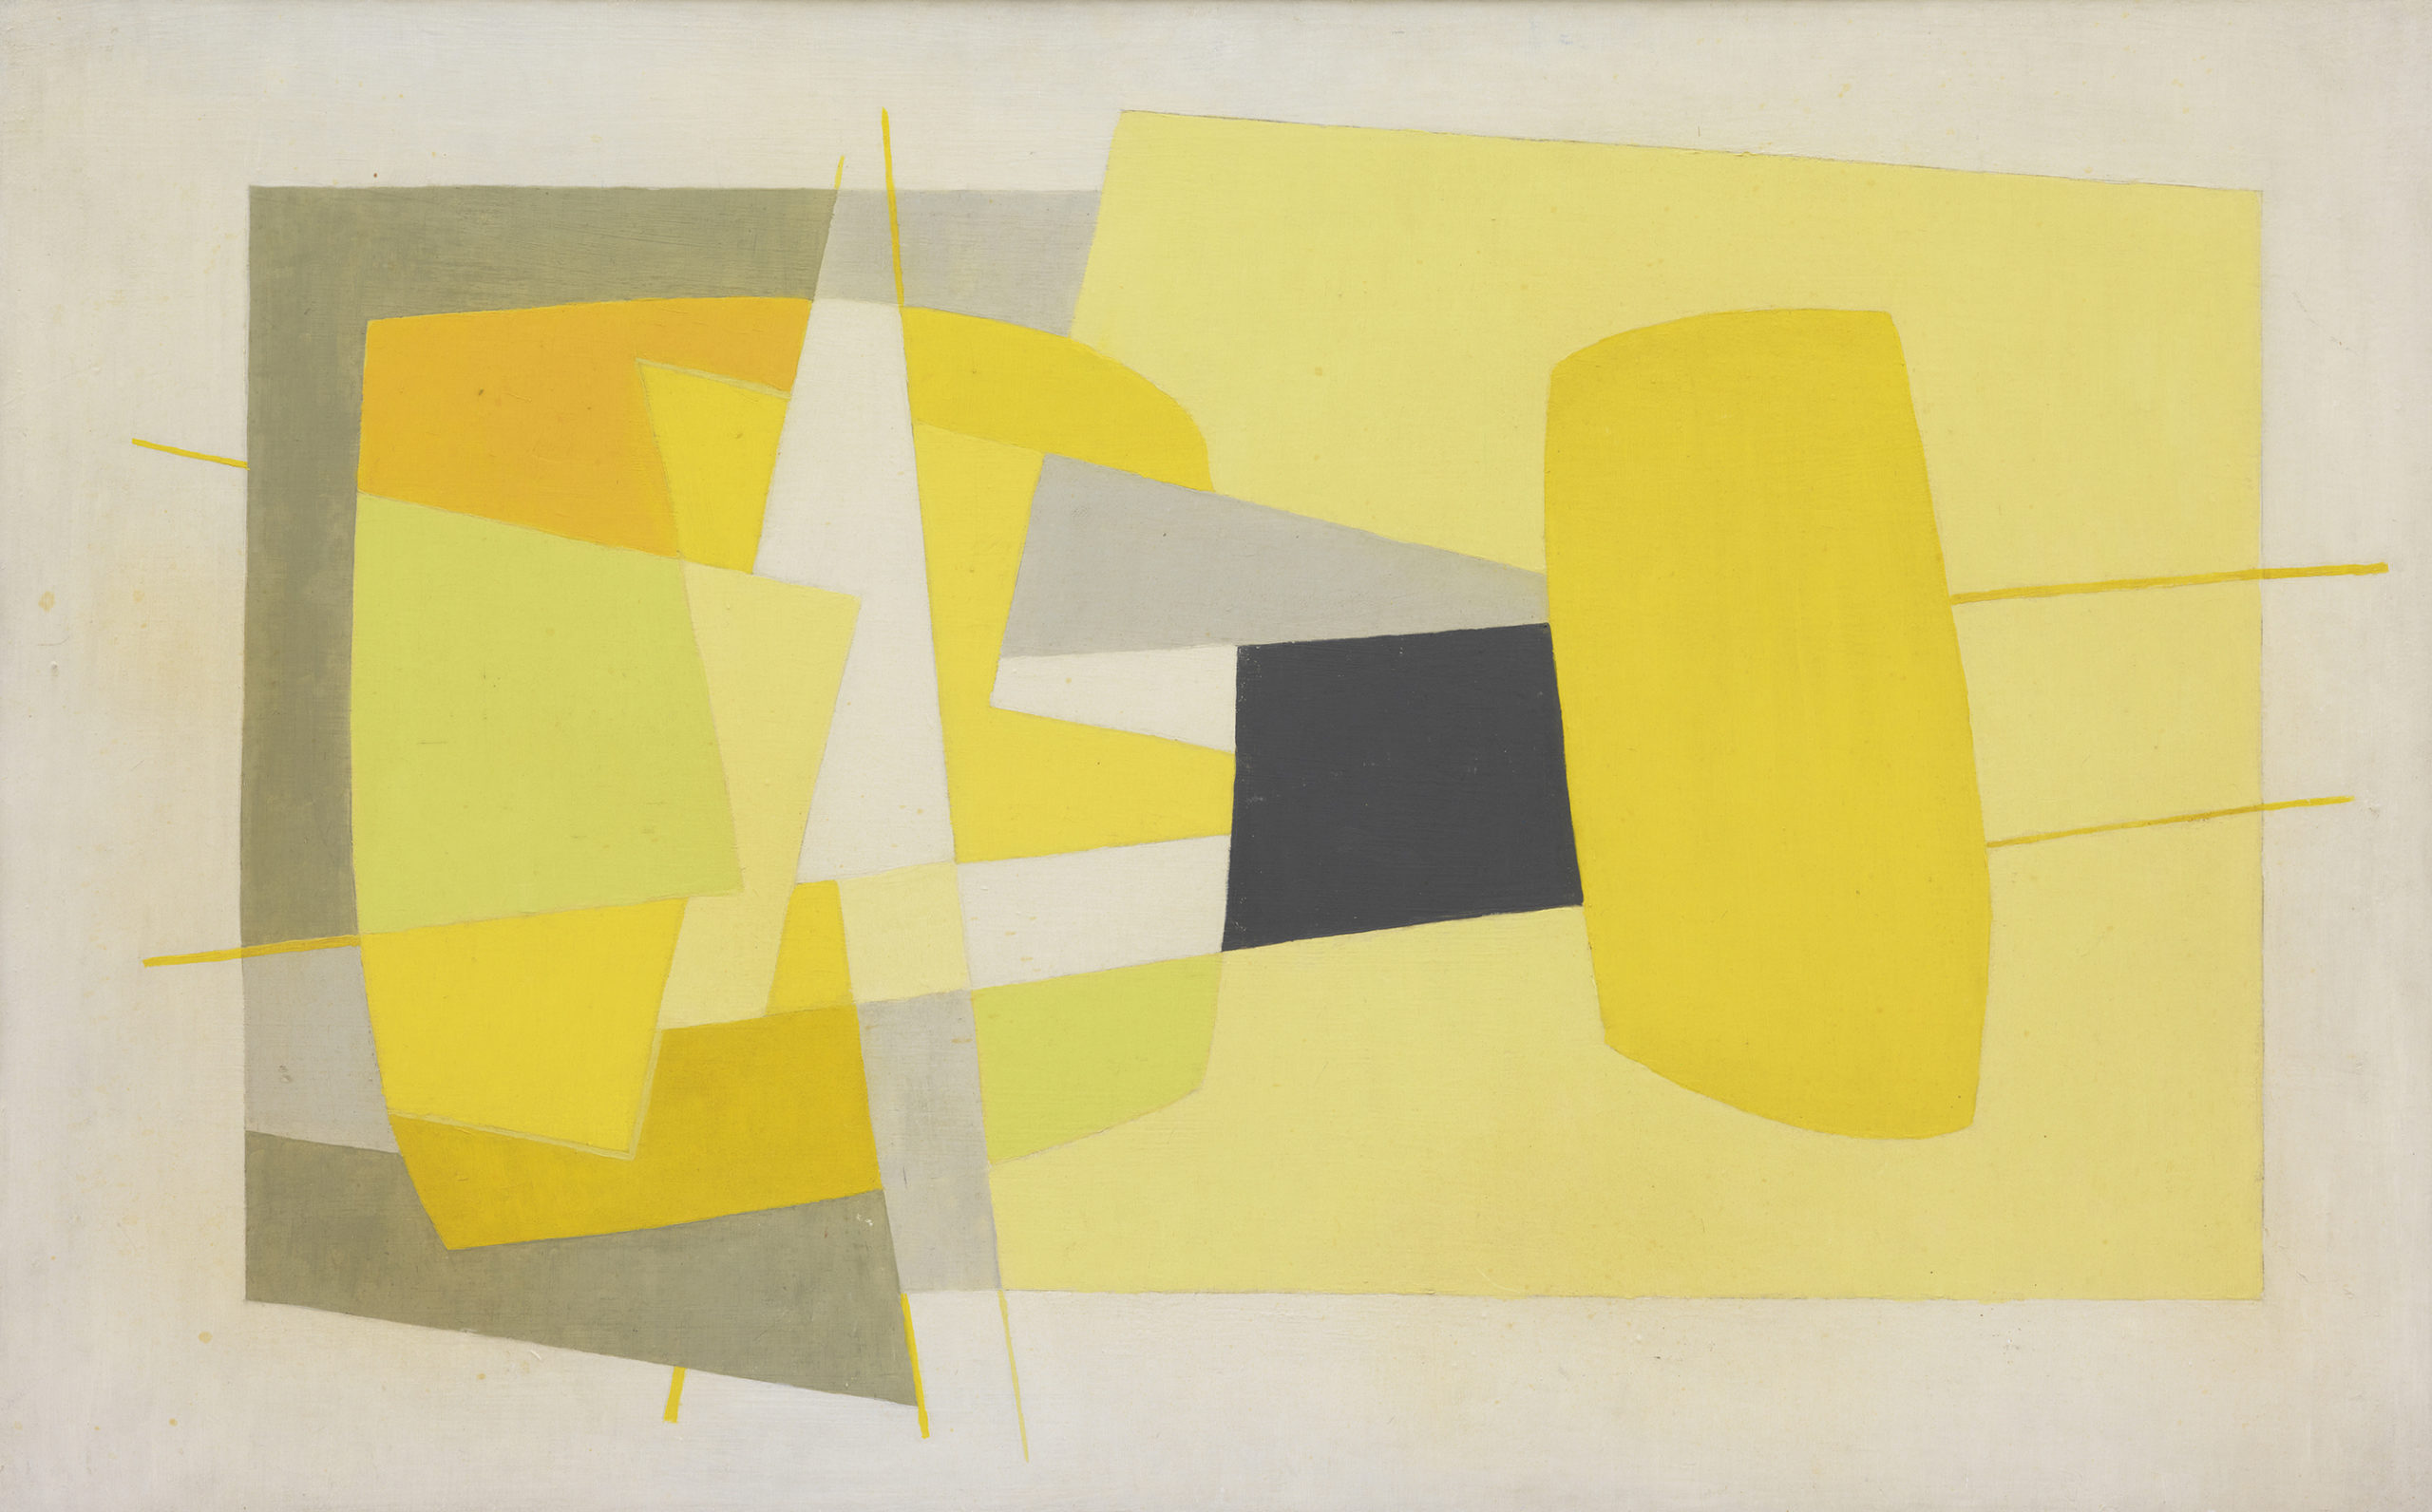 Saloua Raouda Choucair, Composition in Yellow, 1962–65, Oil on fiberboard, 51.4 × 81.3 cm. Image courtesy of Barjeel Art Foundation, Sharjah. 